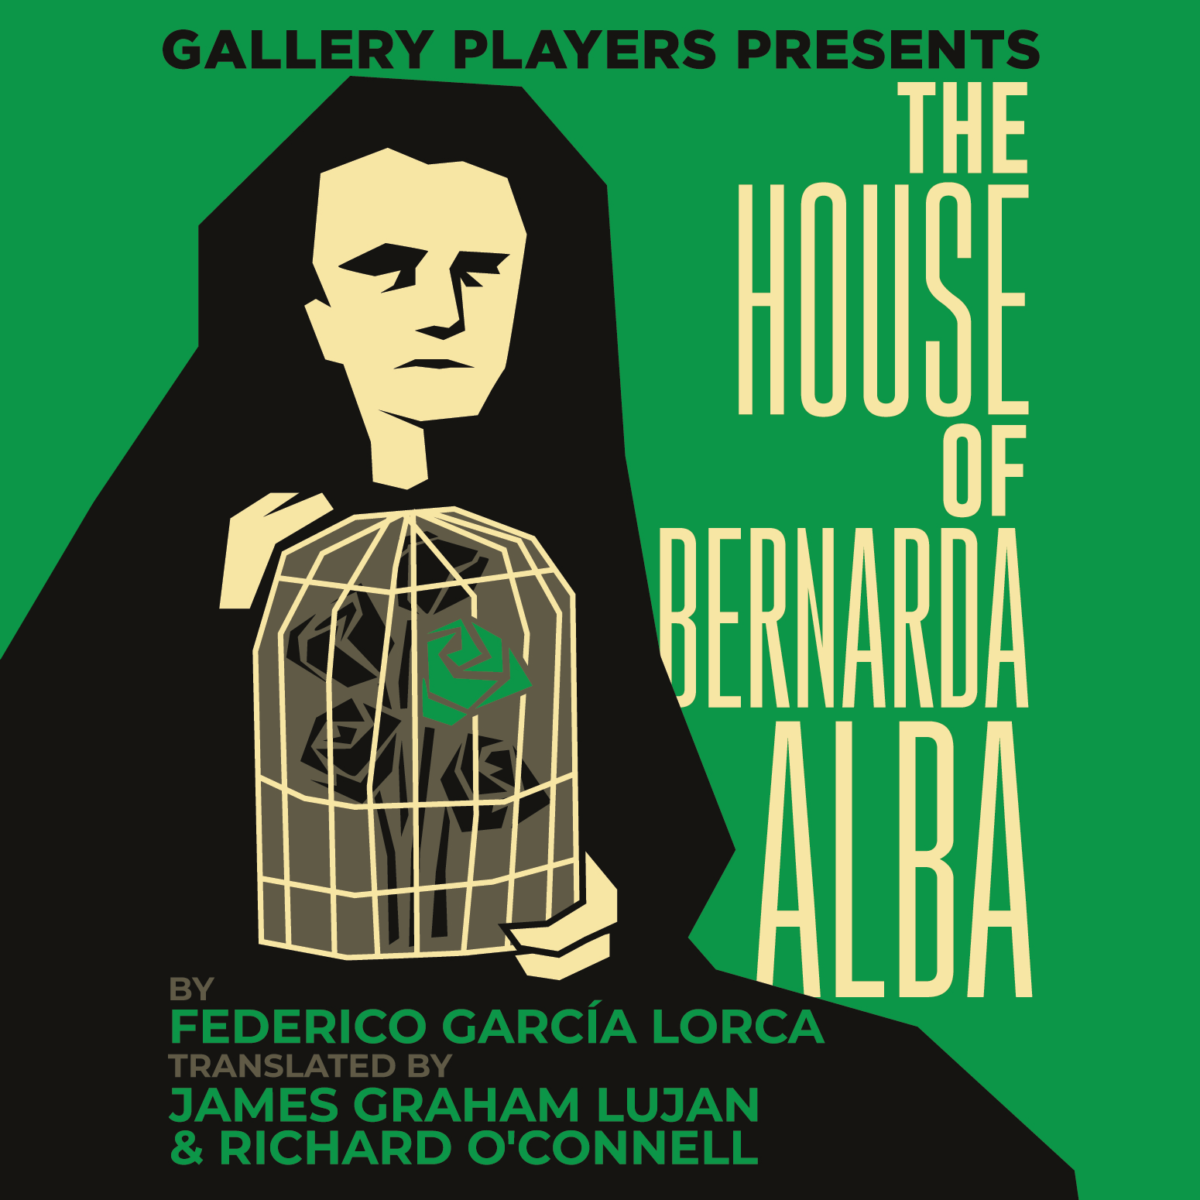 BernardaAlba-poster-square